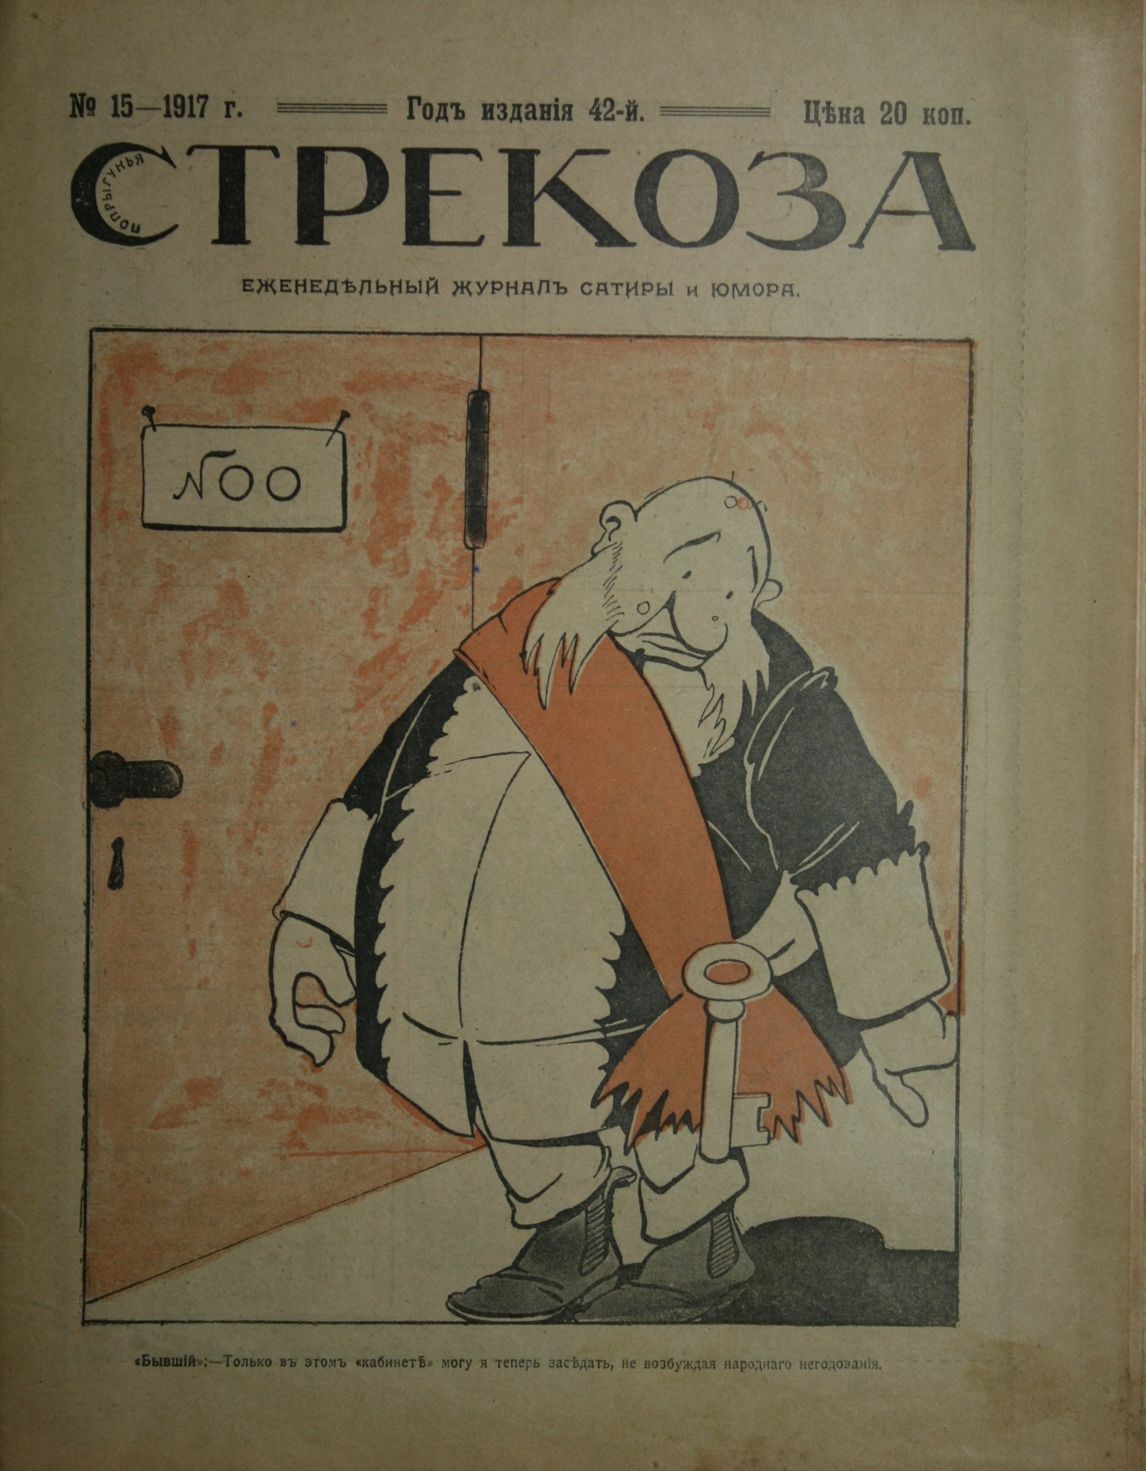 strekosa_1917_1